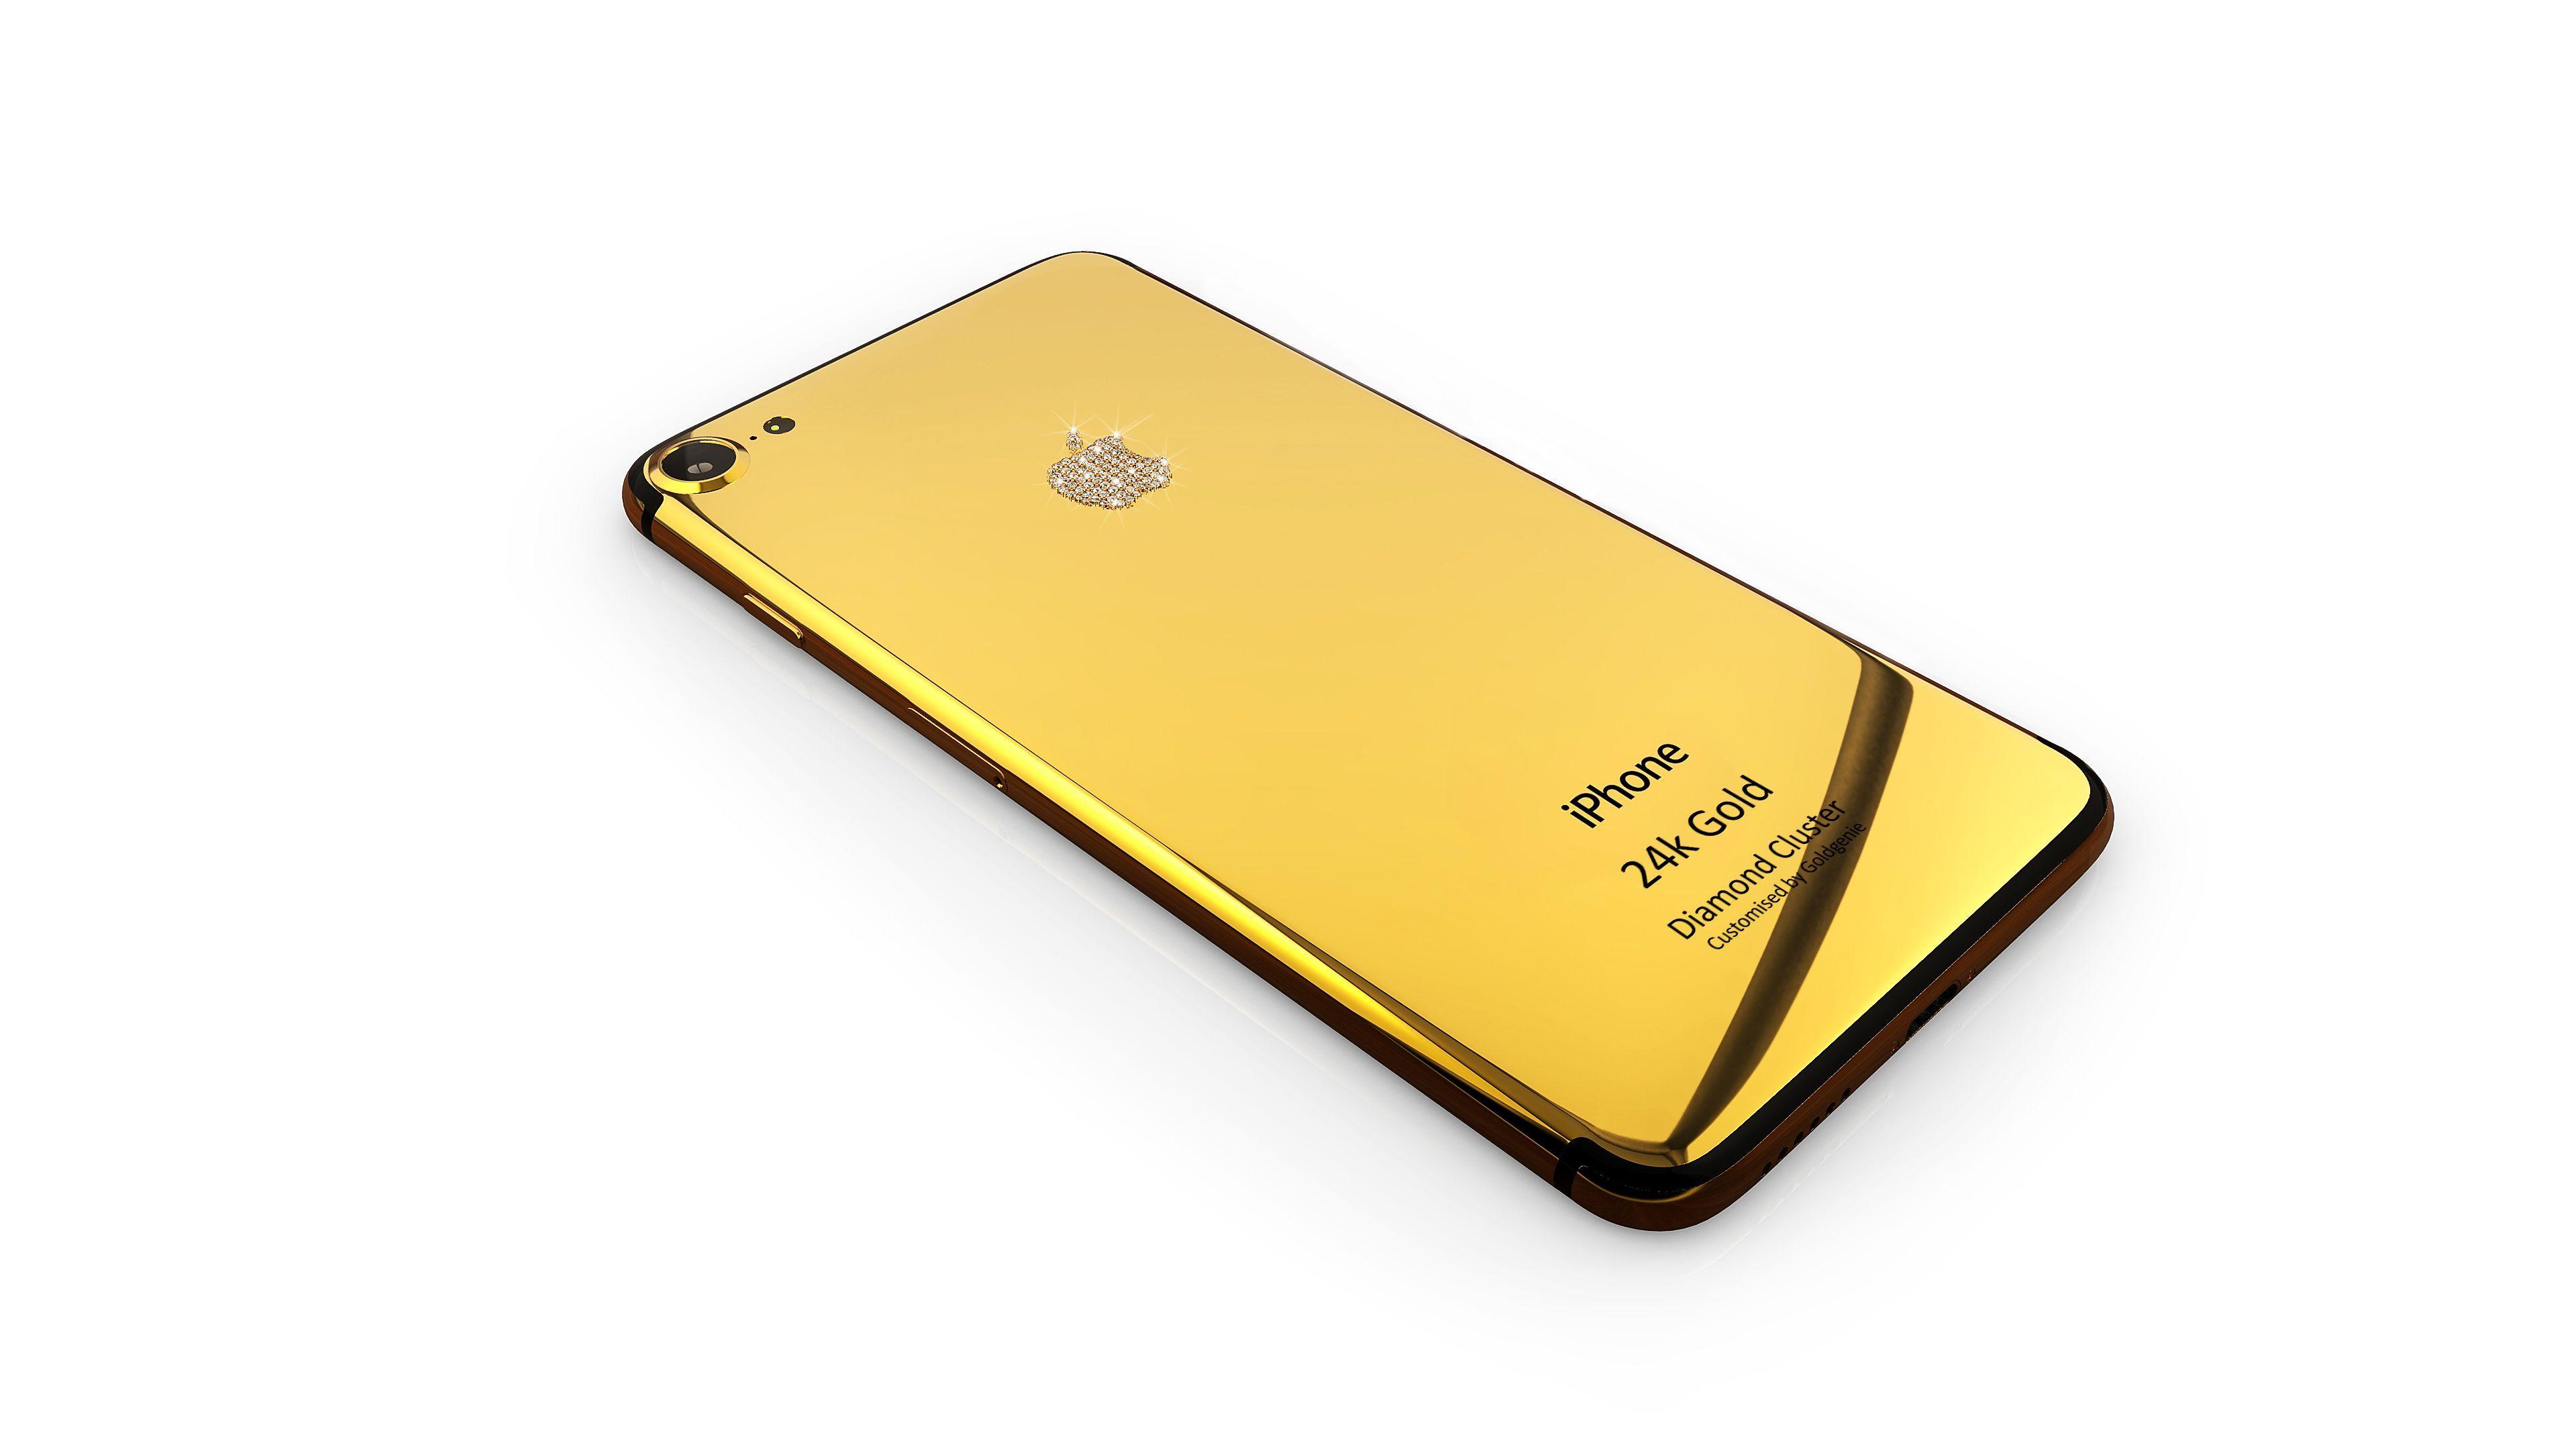 Gold and Diamond Apple Logo - 24k Gold iPhone 7 Diamond Cluster with Diamond encrusted Apple logo